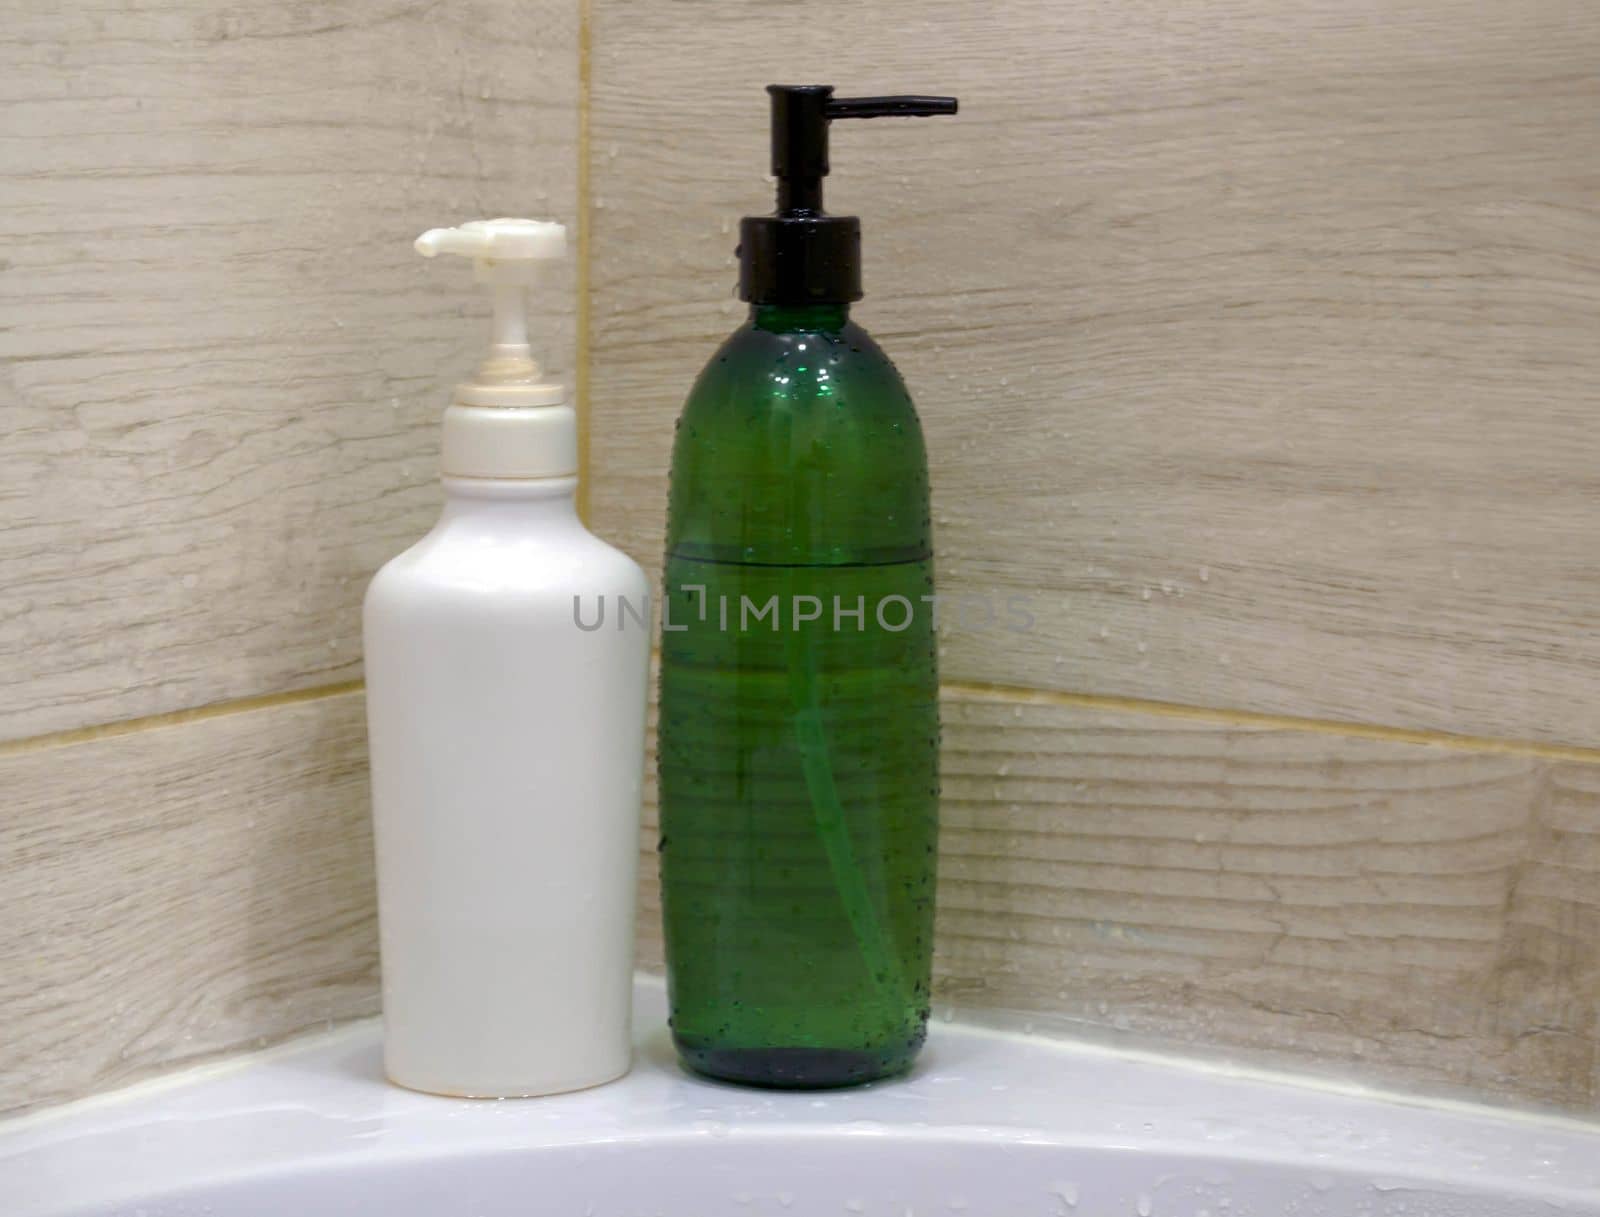 Shampoo bottles. White and green shampoo bottles in the bathroom.